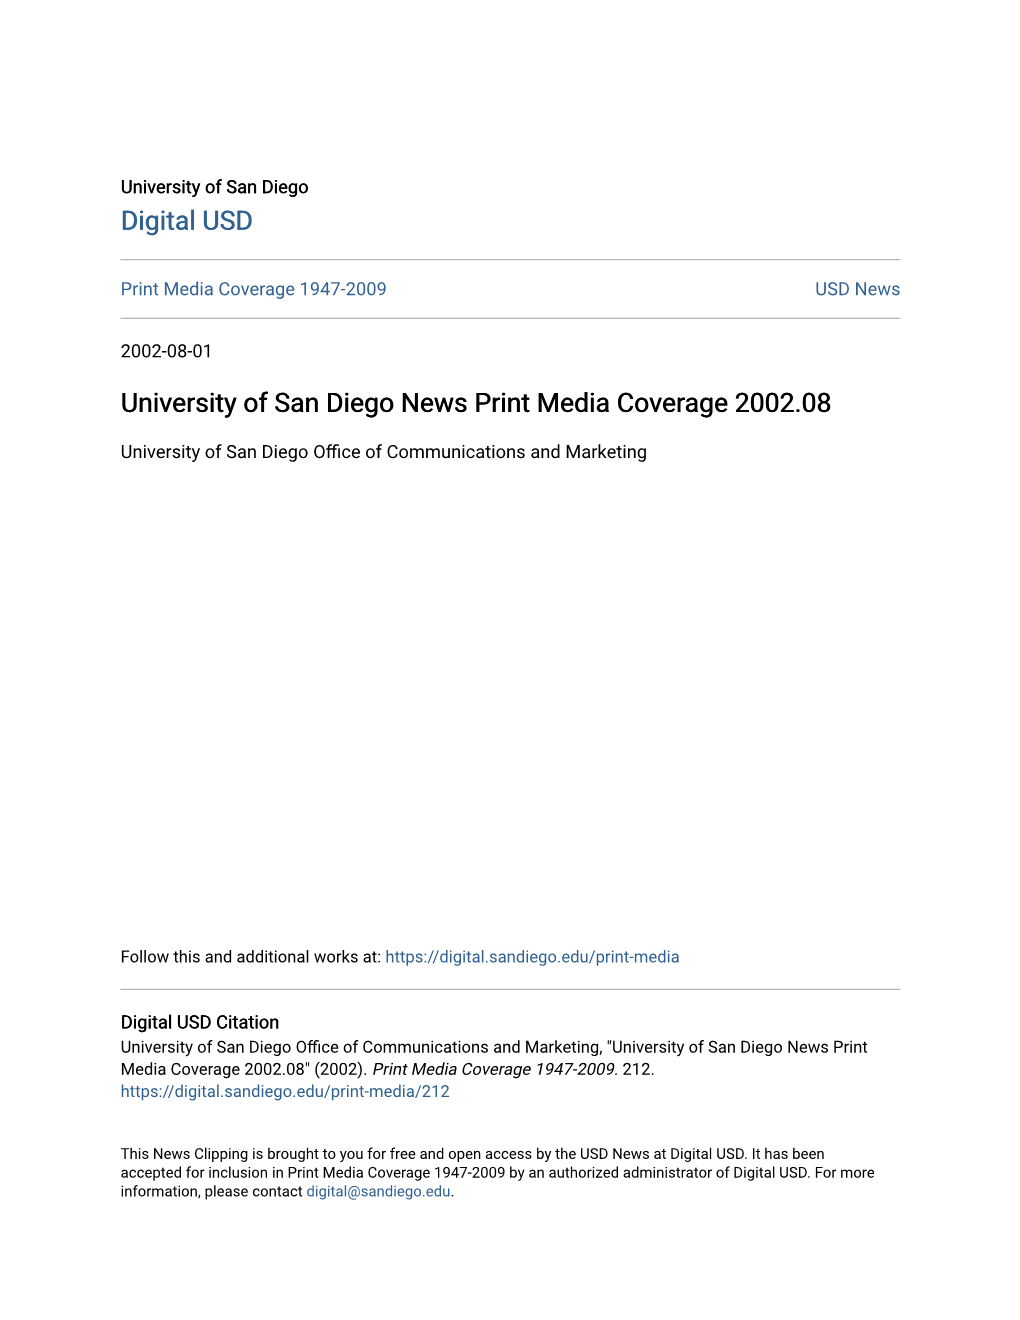 University of San Diego News Print Media Coverage 2002.08